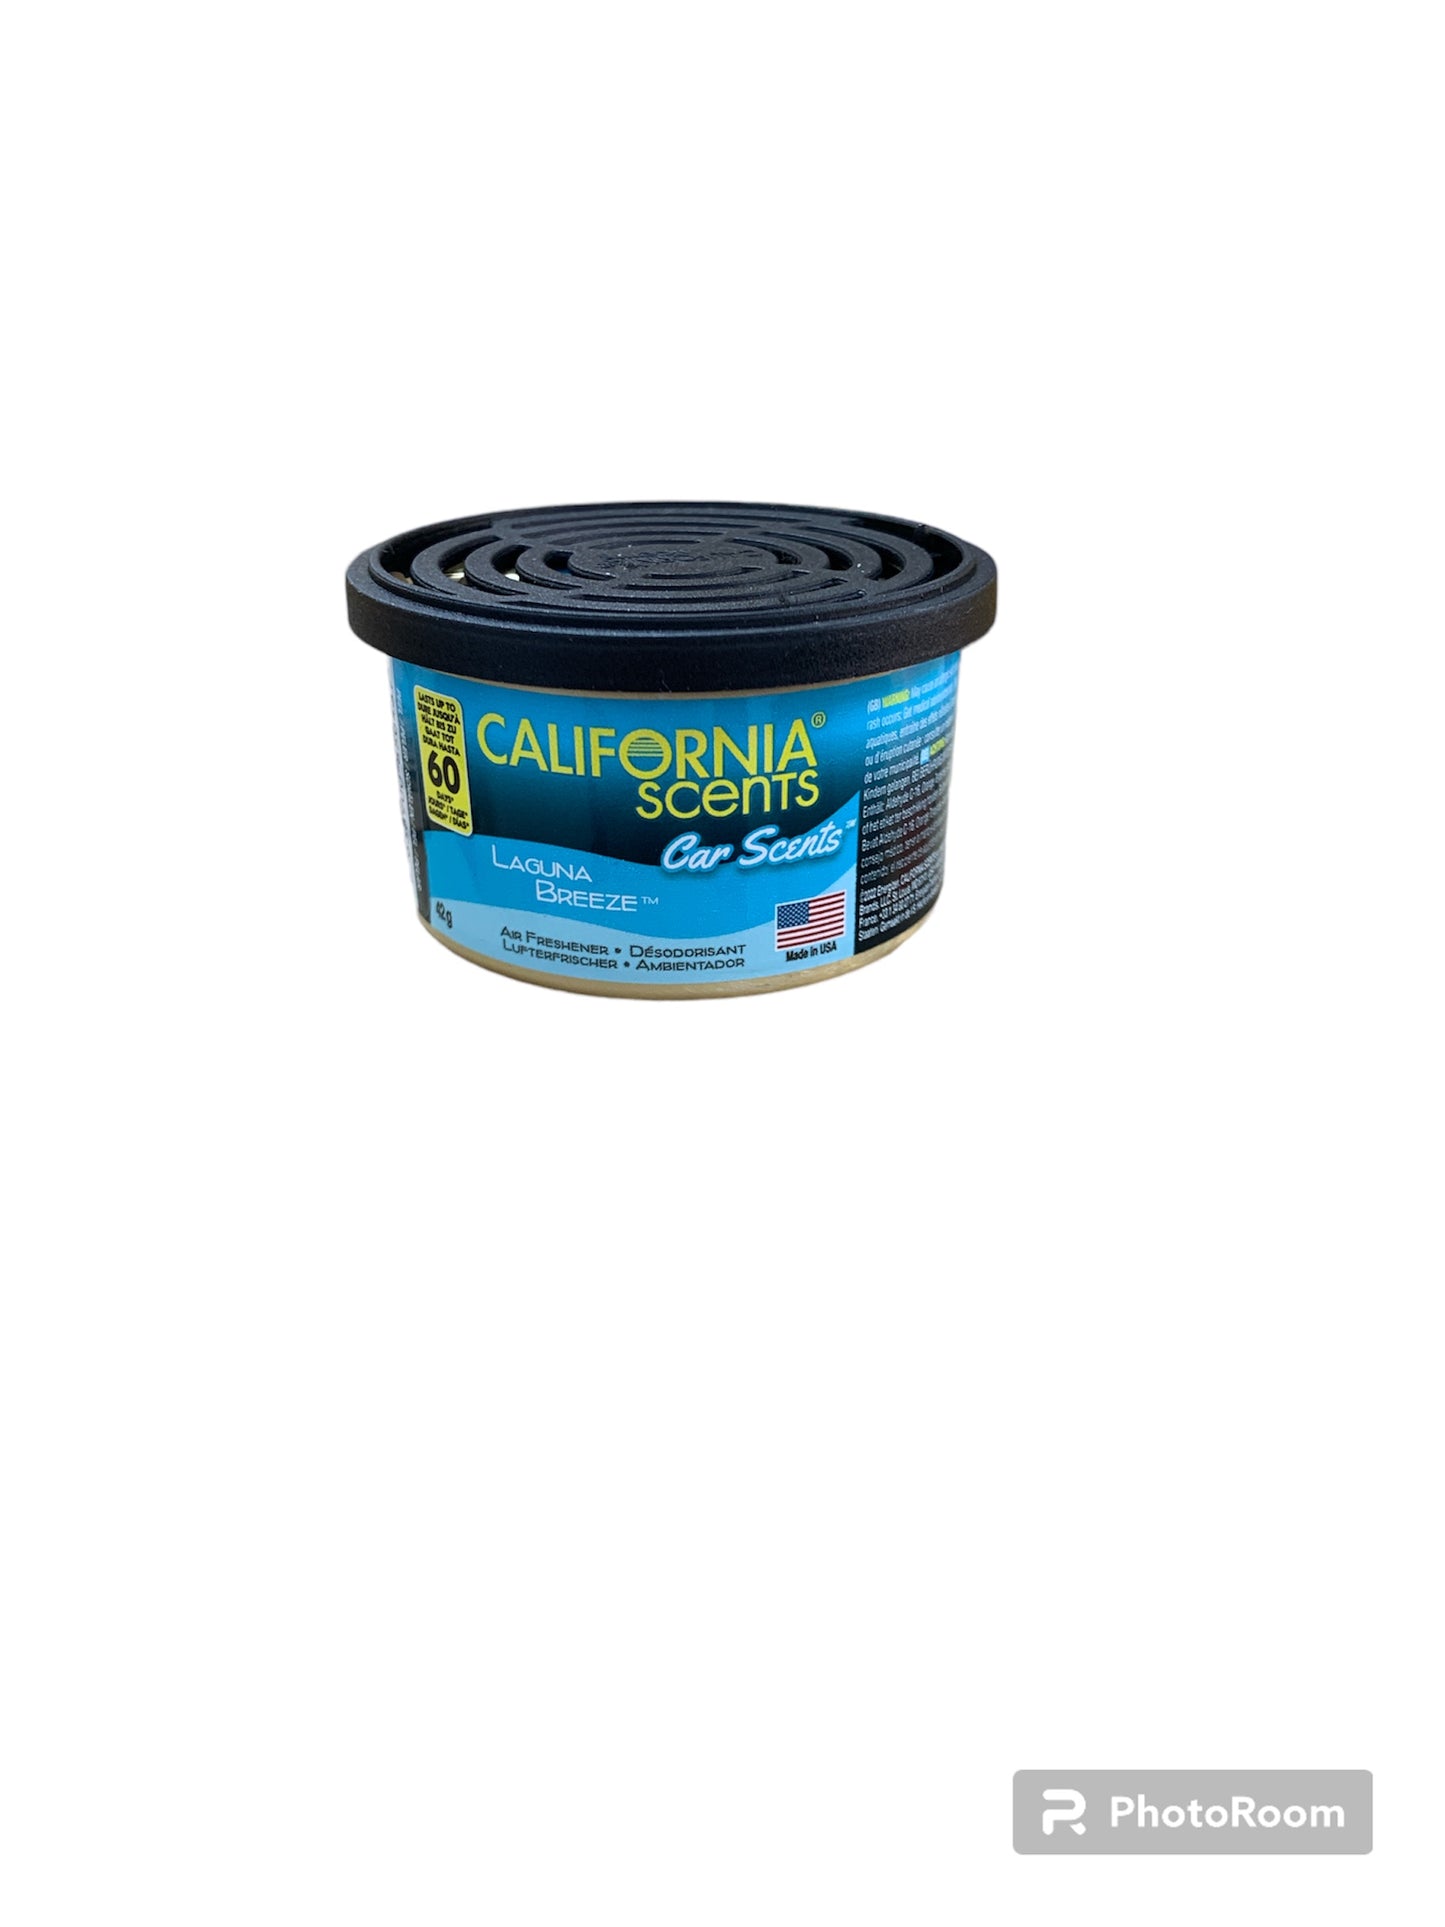 Car freshener. California scents